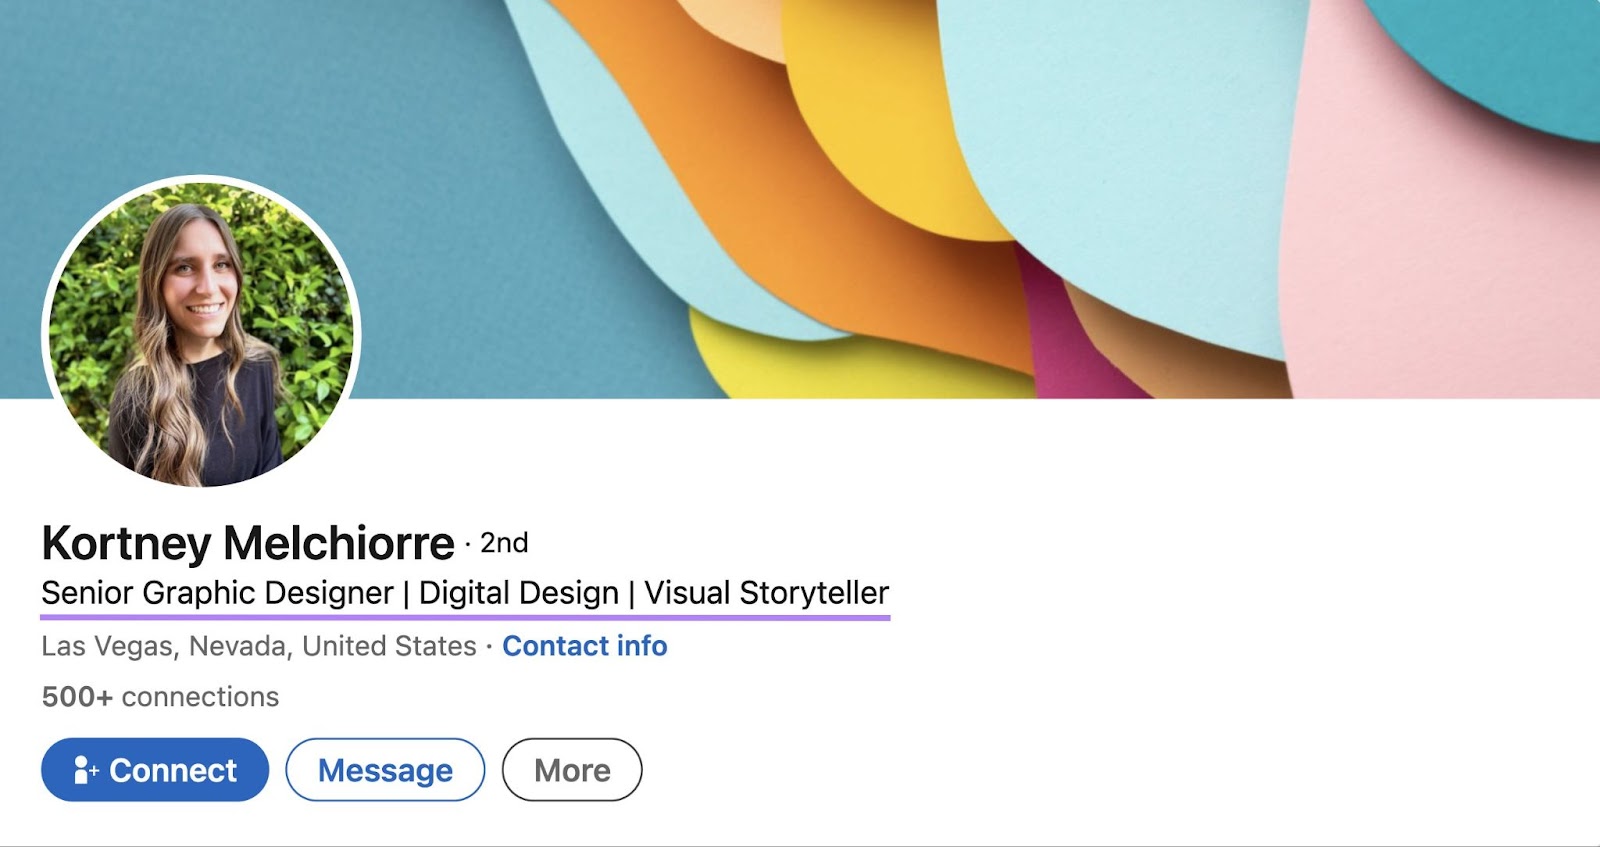 Kortney Melchiorre's LinkedIn profile title reads: "Senior Graphic Designer | Digital Design | Visual Storyteller"